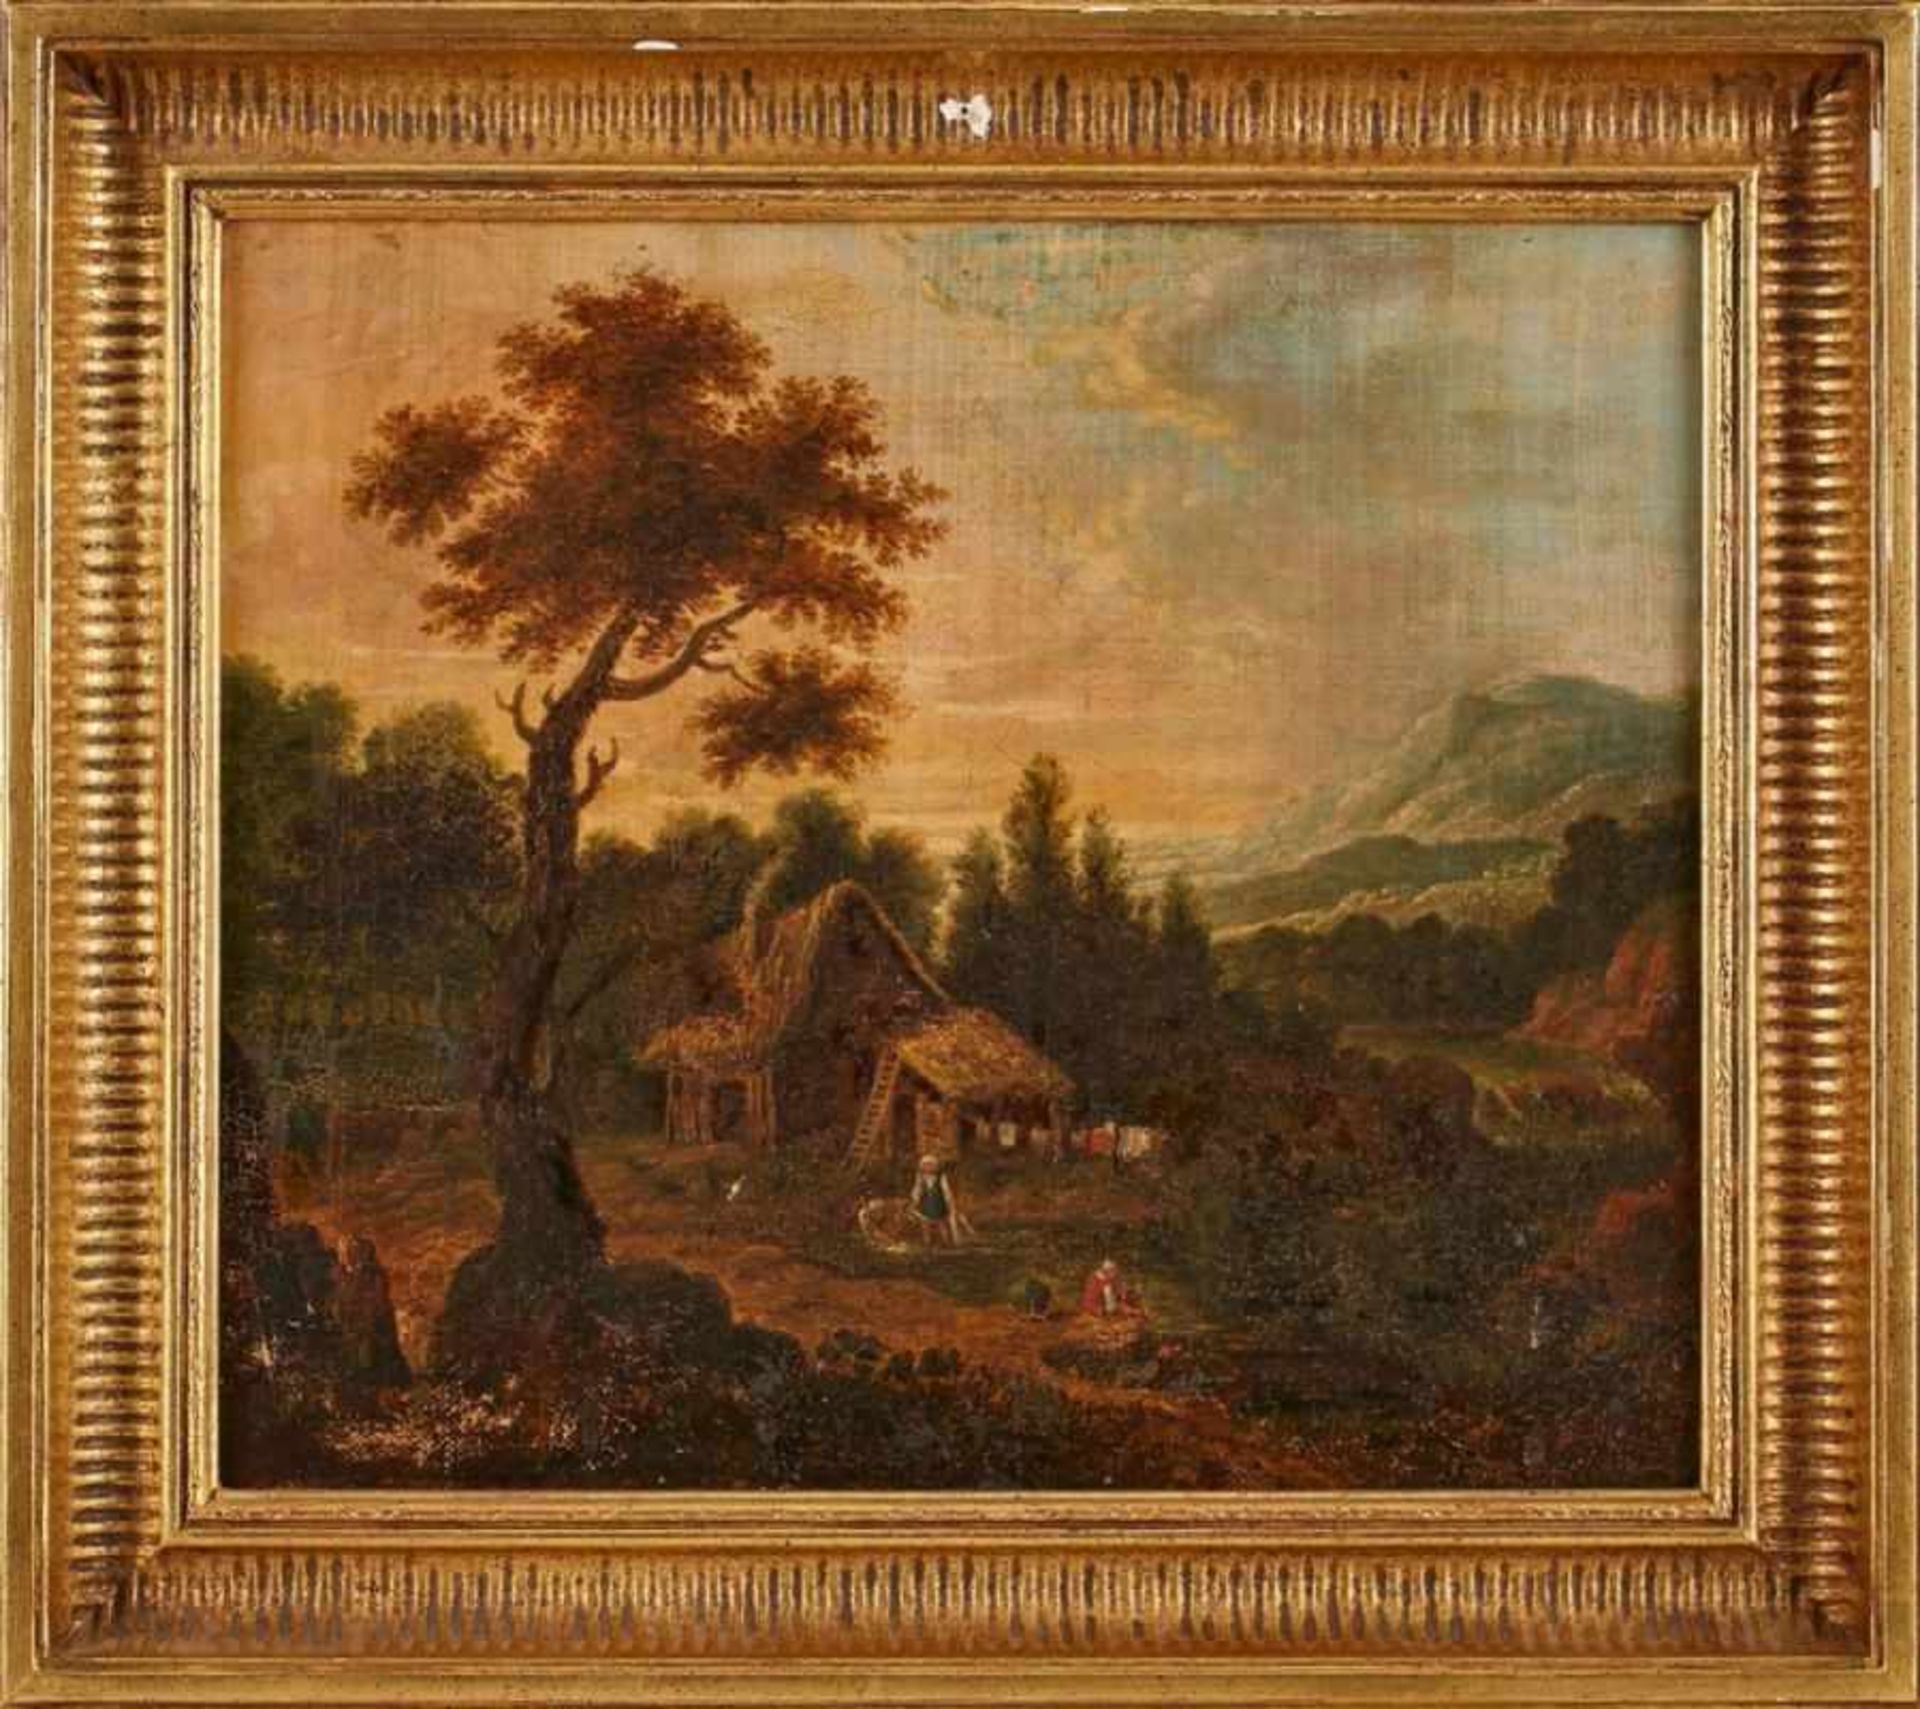 Gemälde Landschaftsmaler 18. Jh. "Idyllische Flußlandschaft" Öl/Lwd., 34 x 41 cm